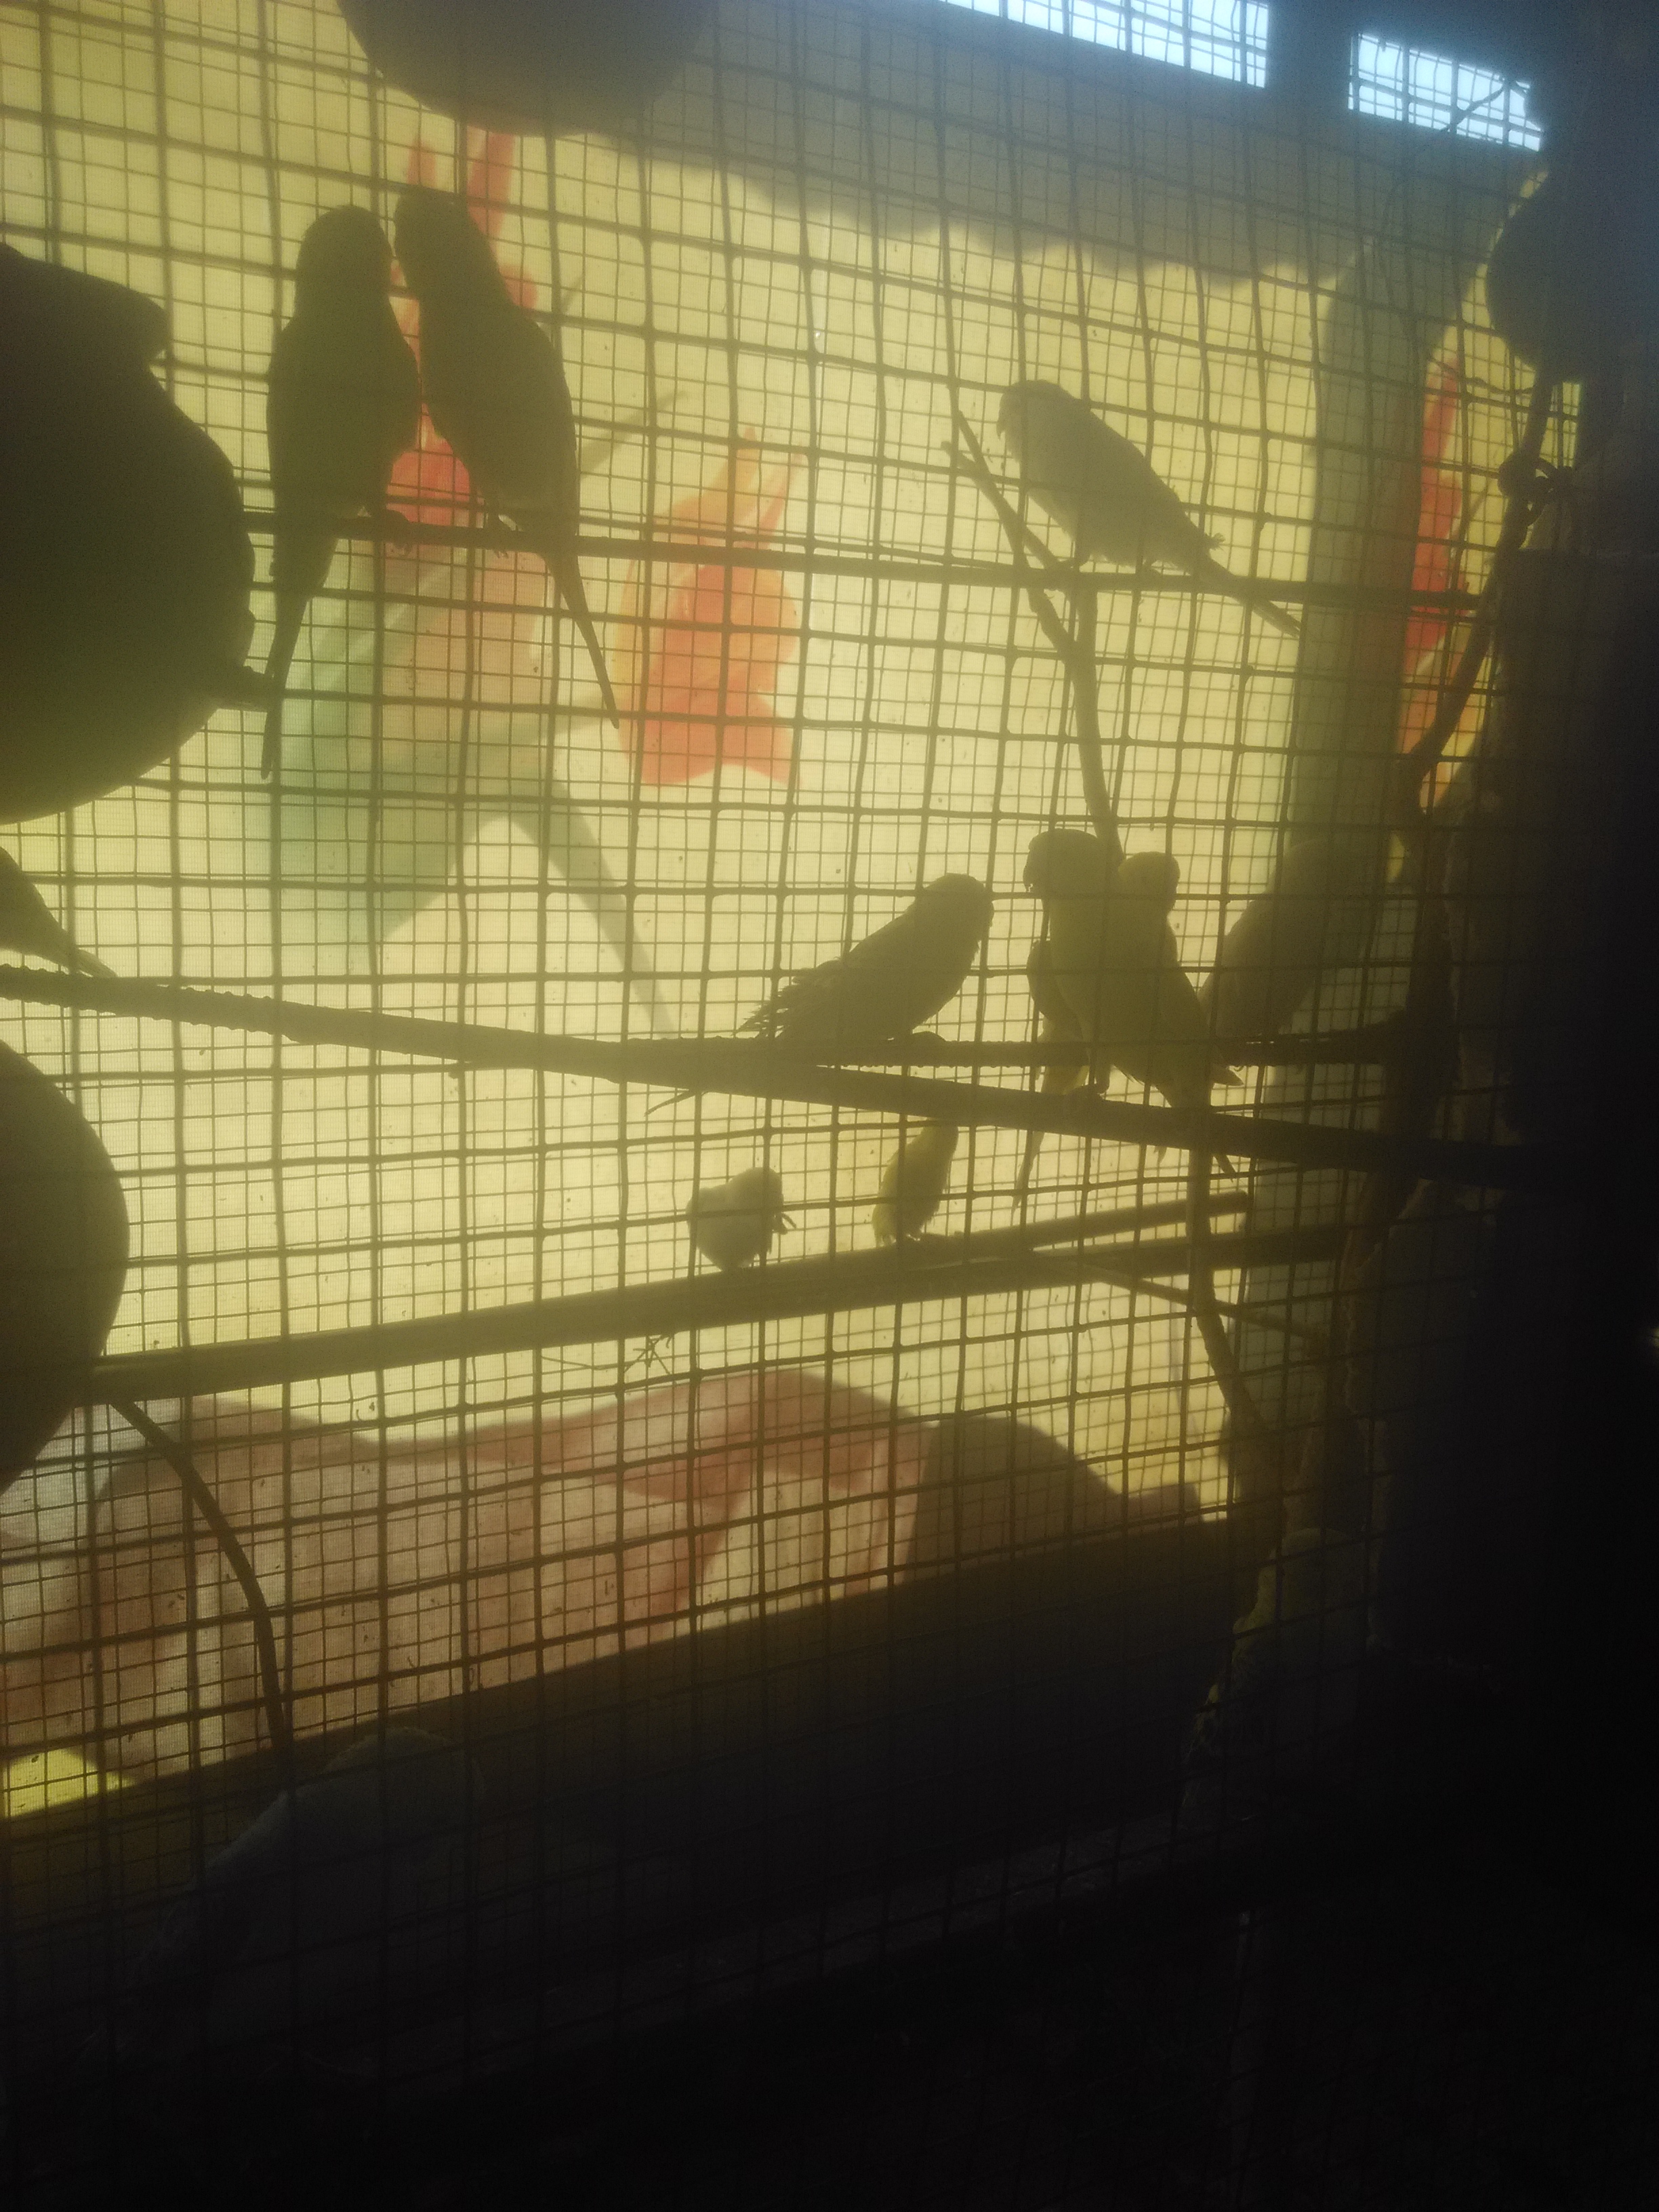 Lovebirds in cage.